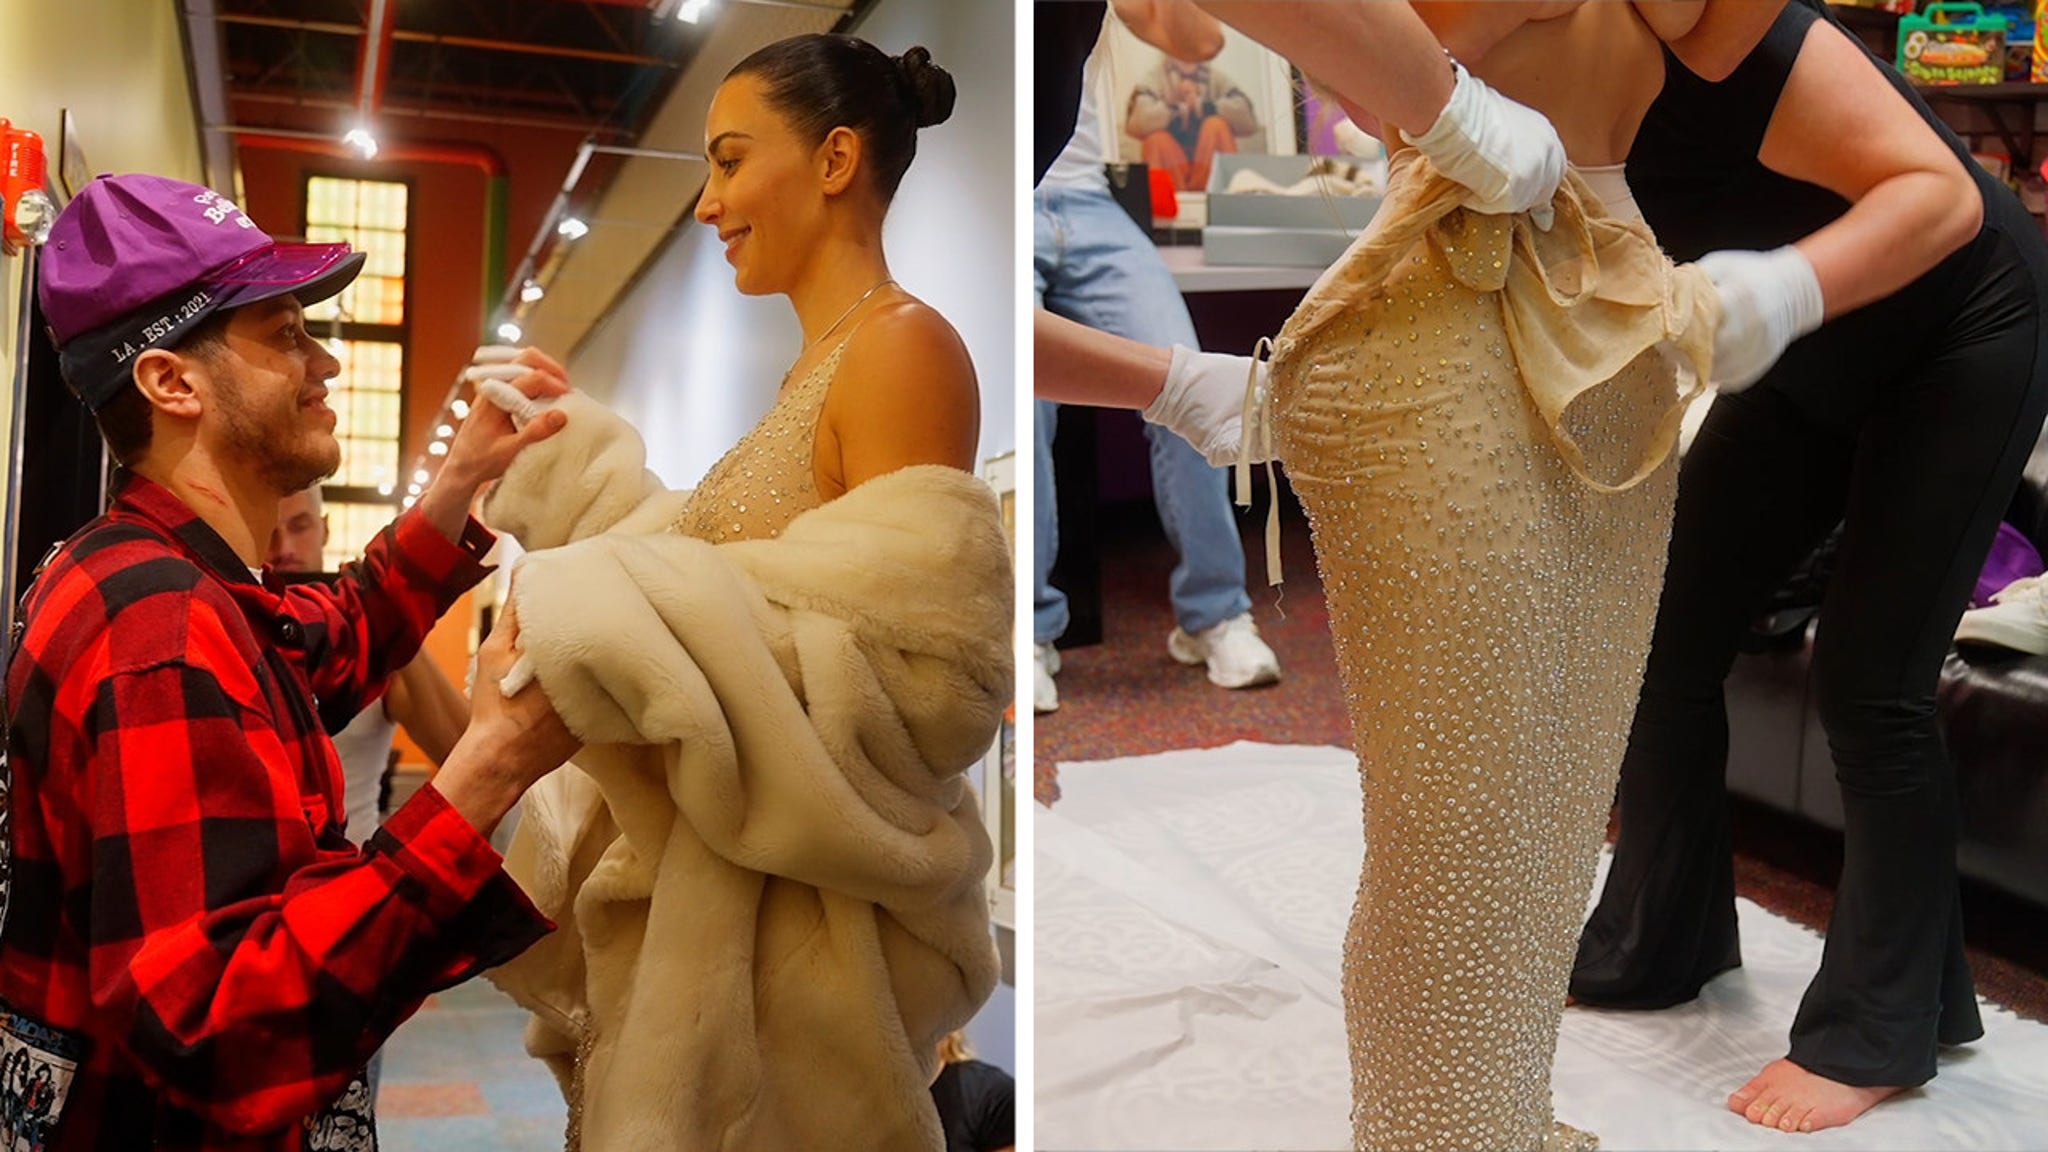 Kim Kardashian revisits Marilyn Monroe dress at Ripley's